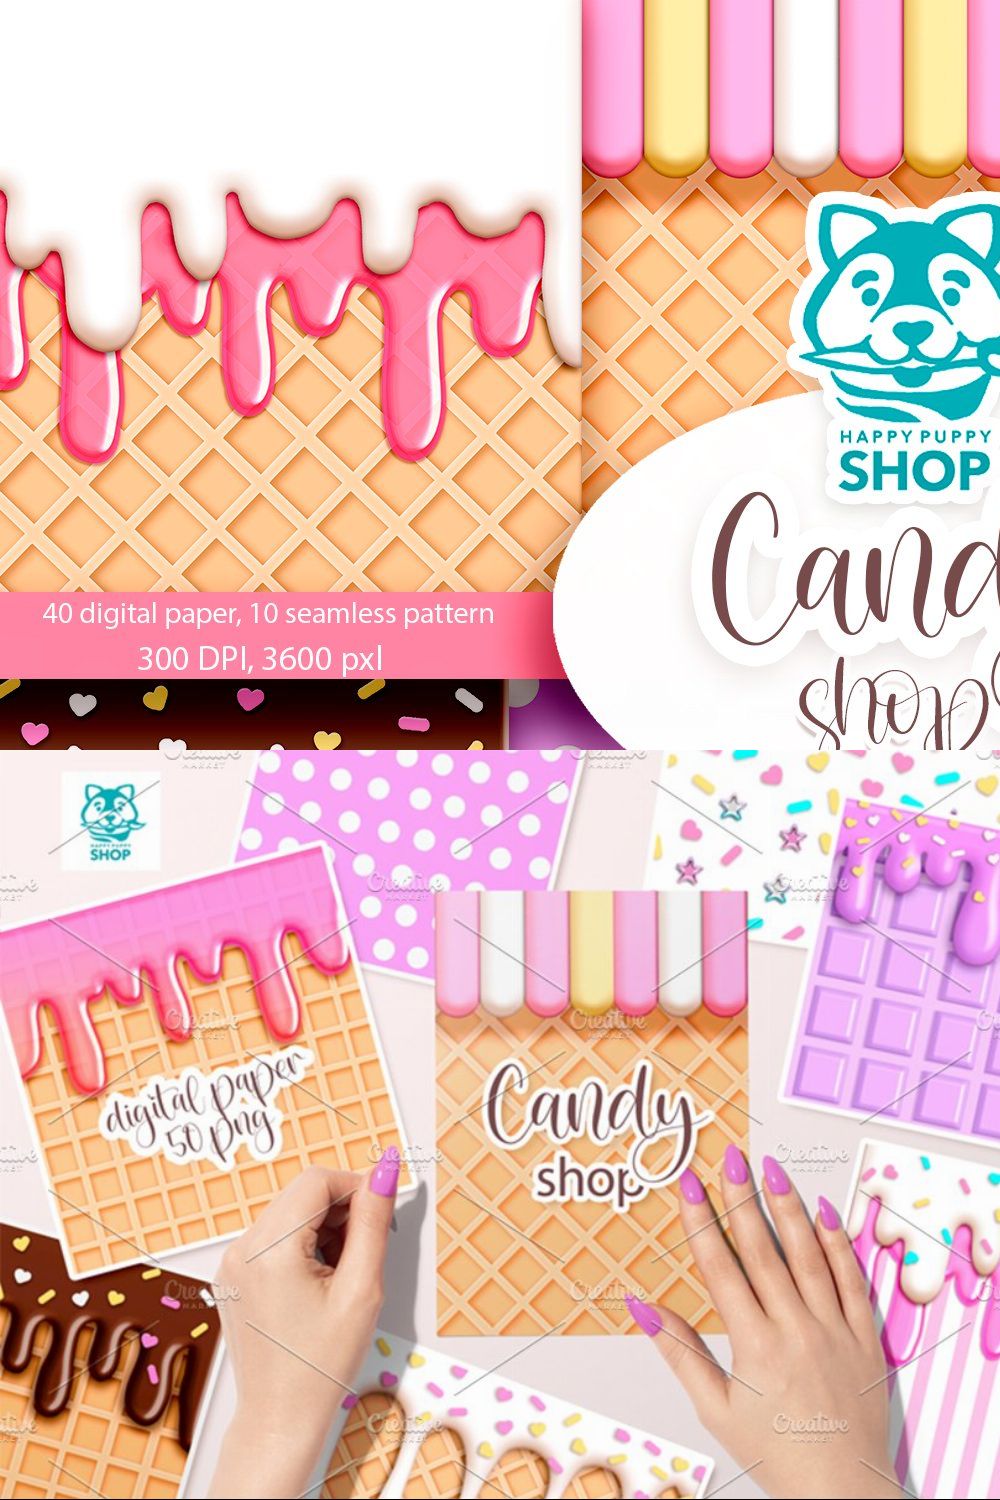 Candy shop digital paper pinterest preview image.